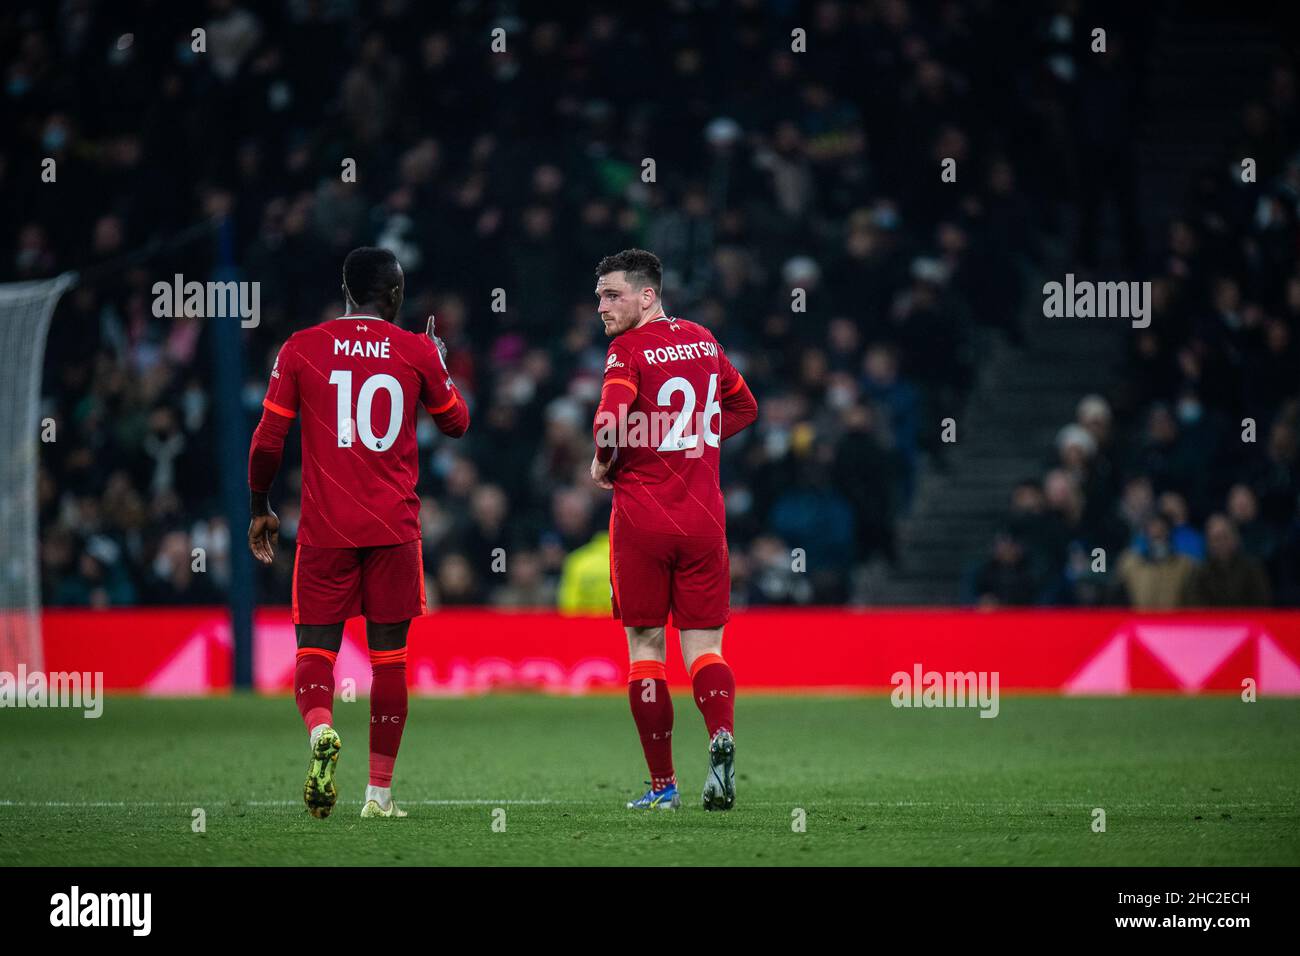 LONDRA, INGHILTERRA - DICEMBRE 19: Sadio Mane, Andrew Robertson durante la partita della Premier League tra Tottenham Hotspur e Liverpool a Tottenham Hot Foto Stock